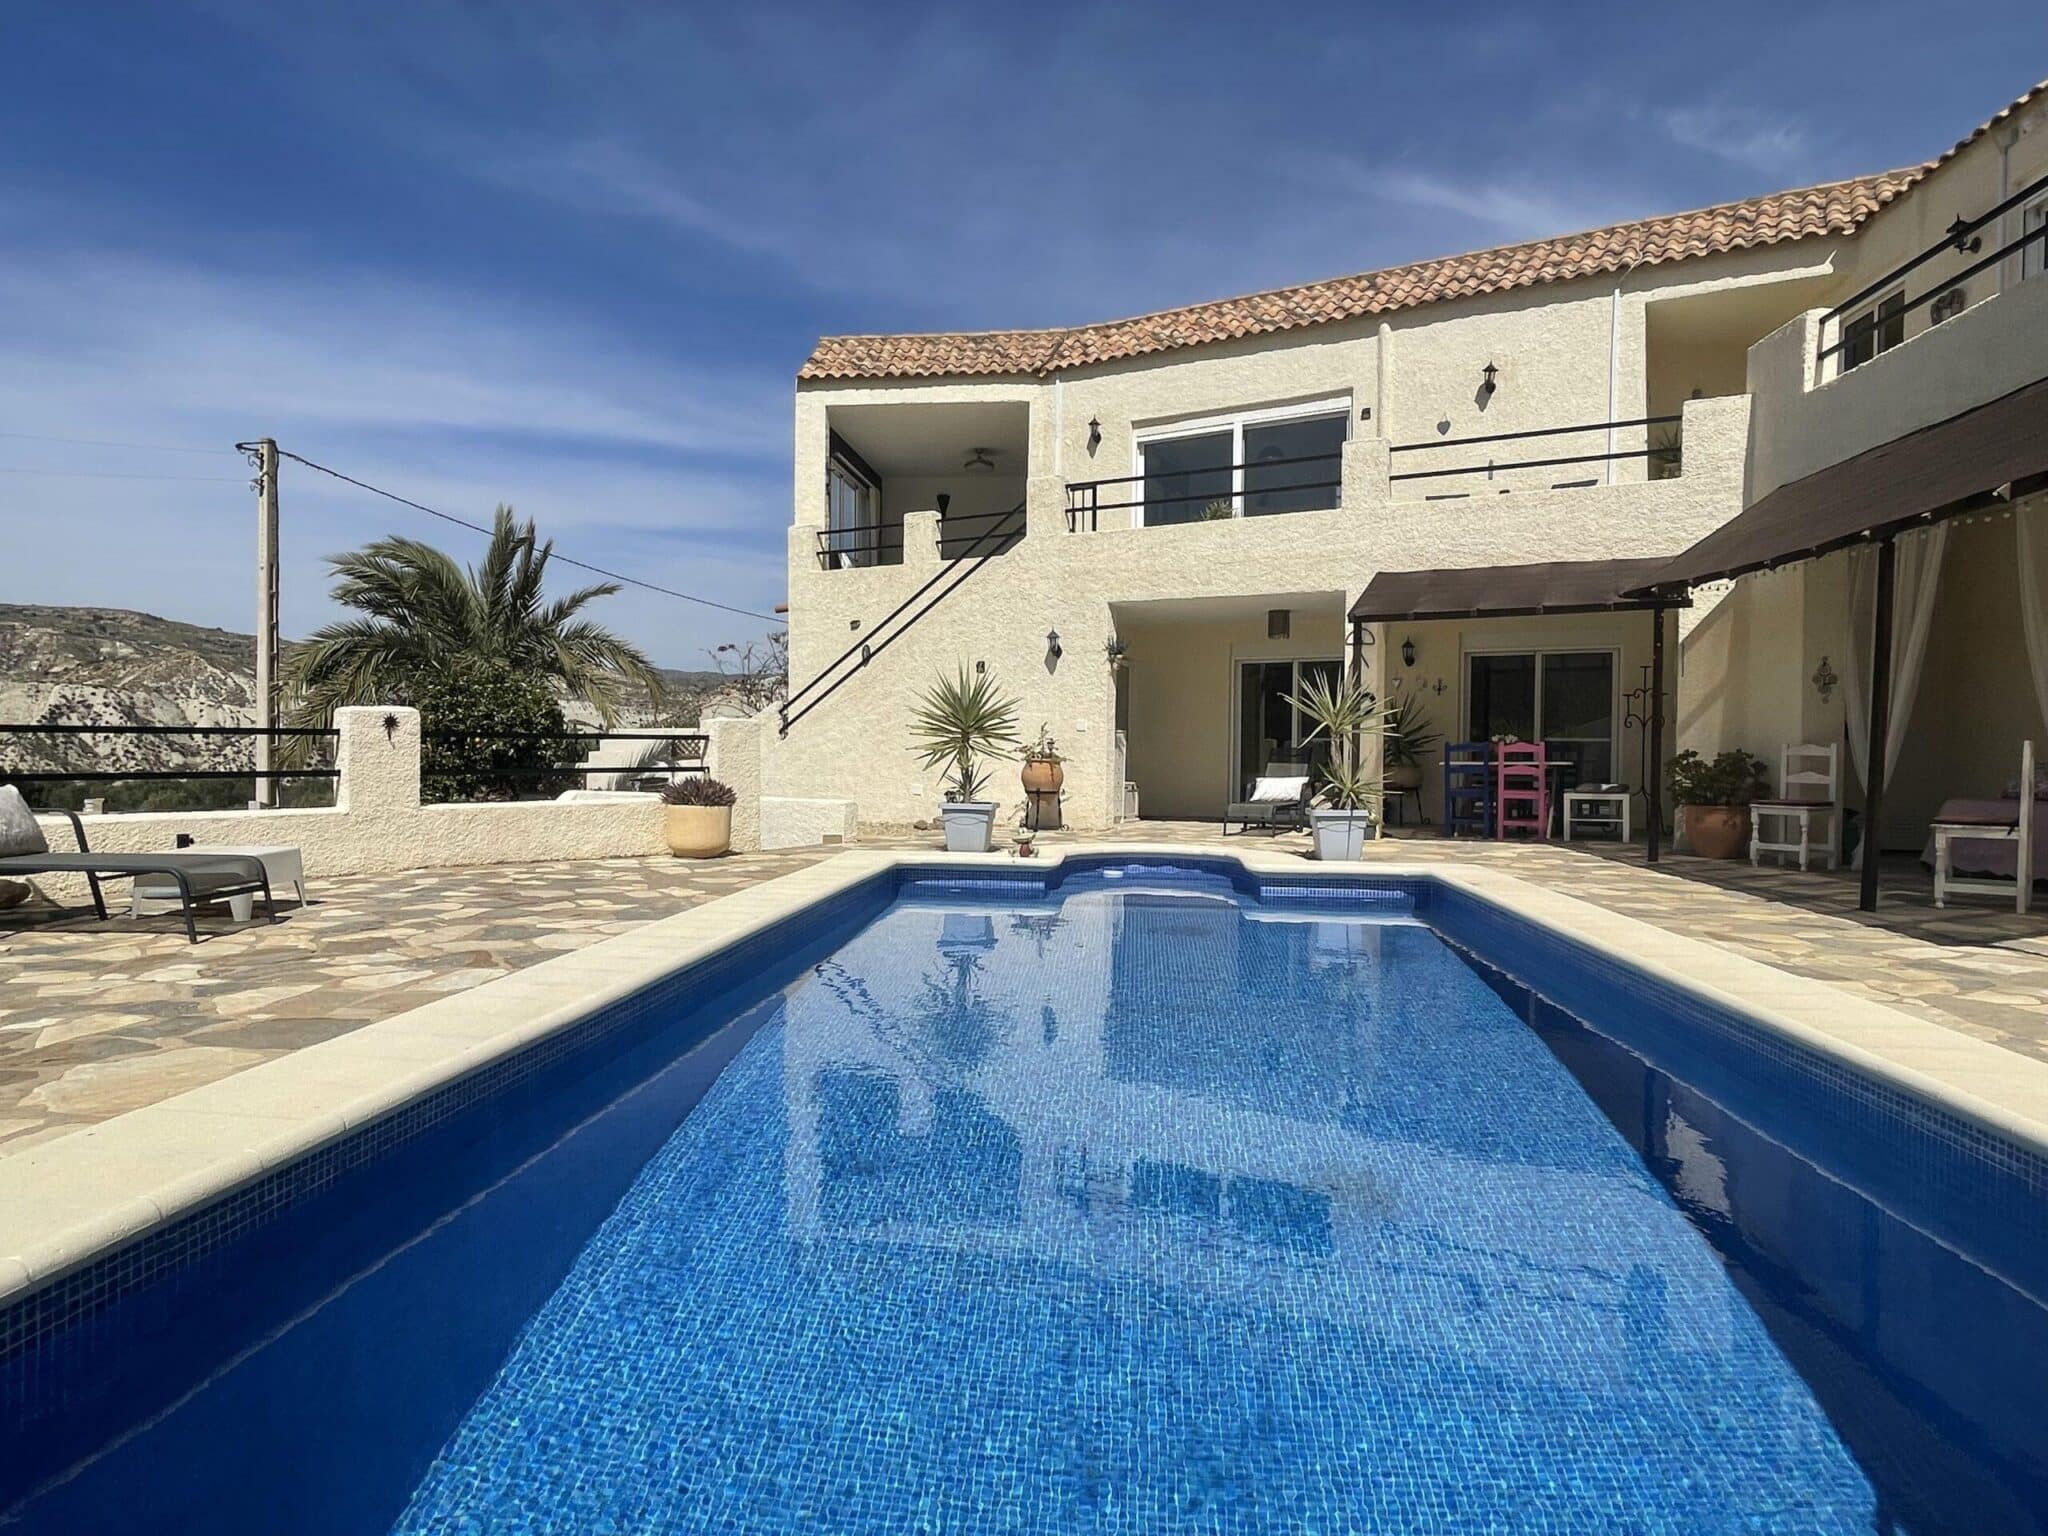 Villa Te koop in Sorbas in Spanje, gelegen aan de Costa de Almería